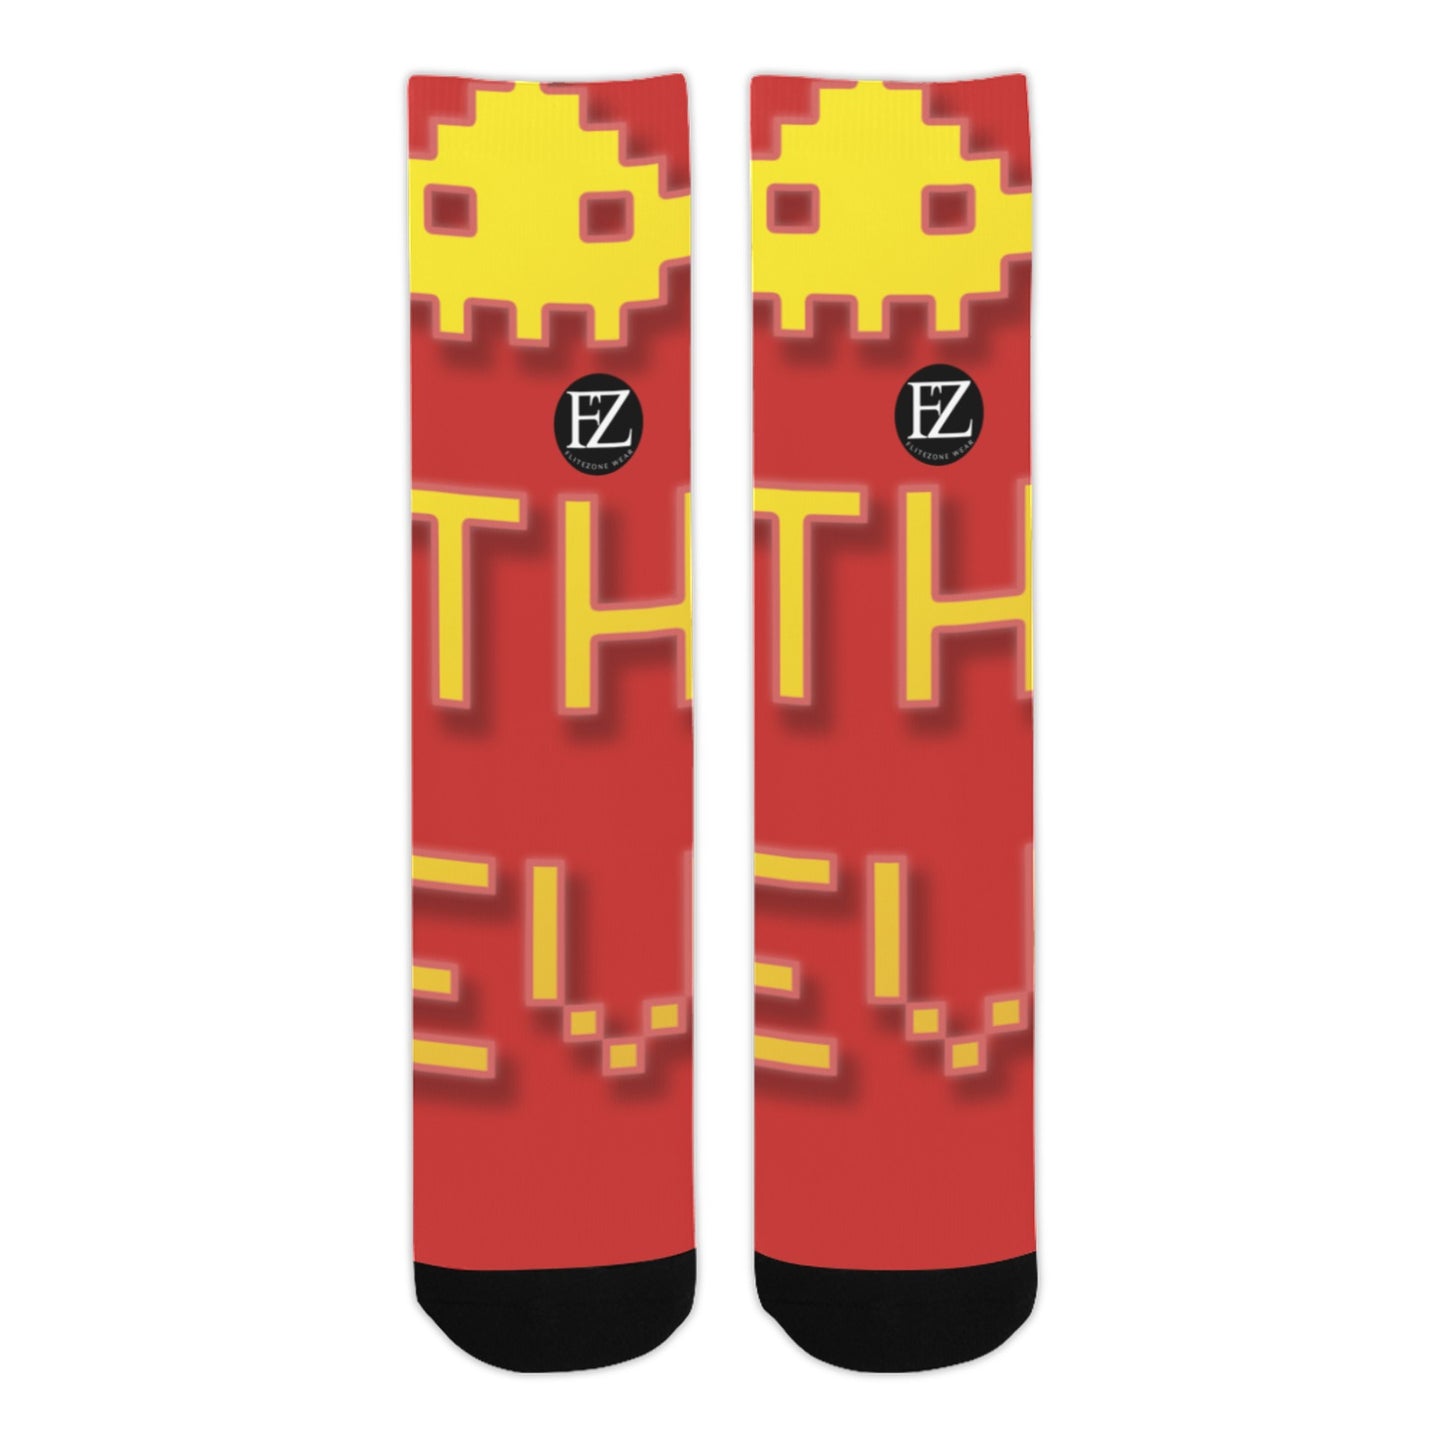 fz unisex socks - yellow one size / fz socks - red sublimated crew socks(made in usa)